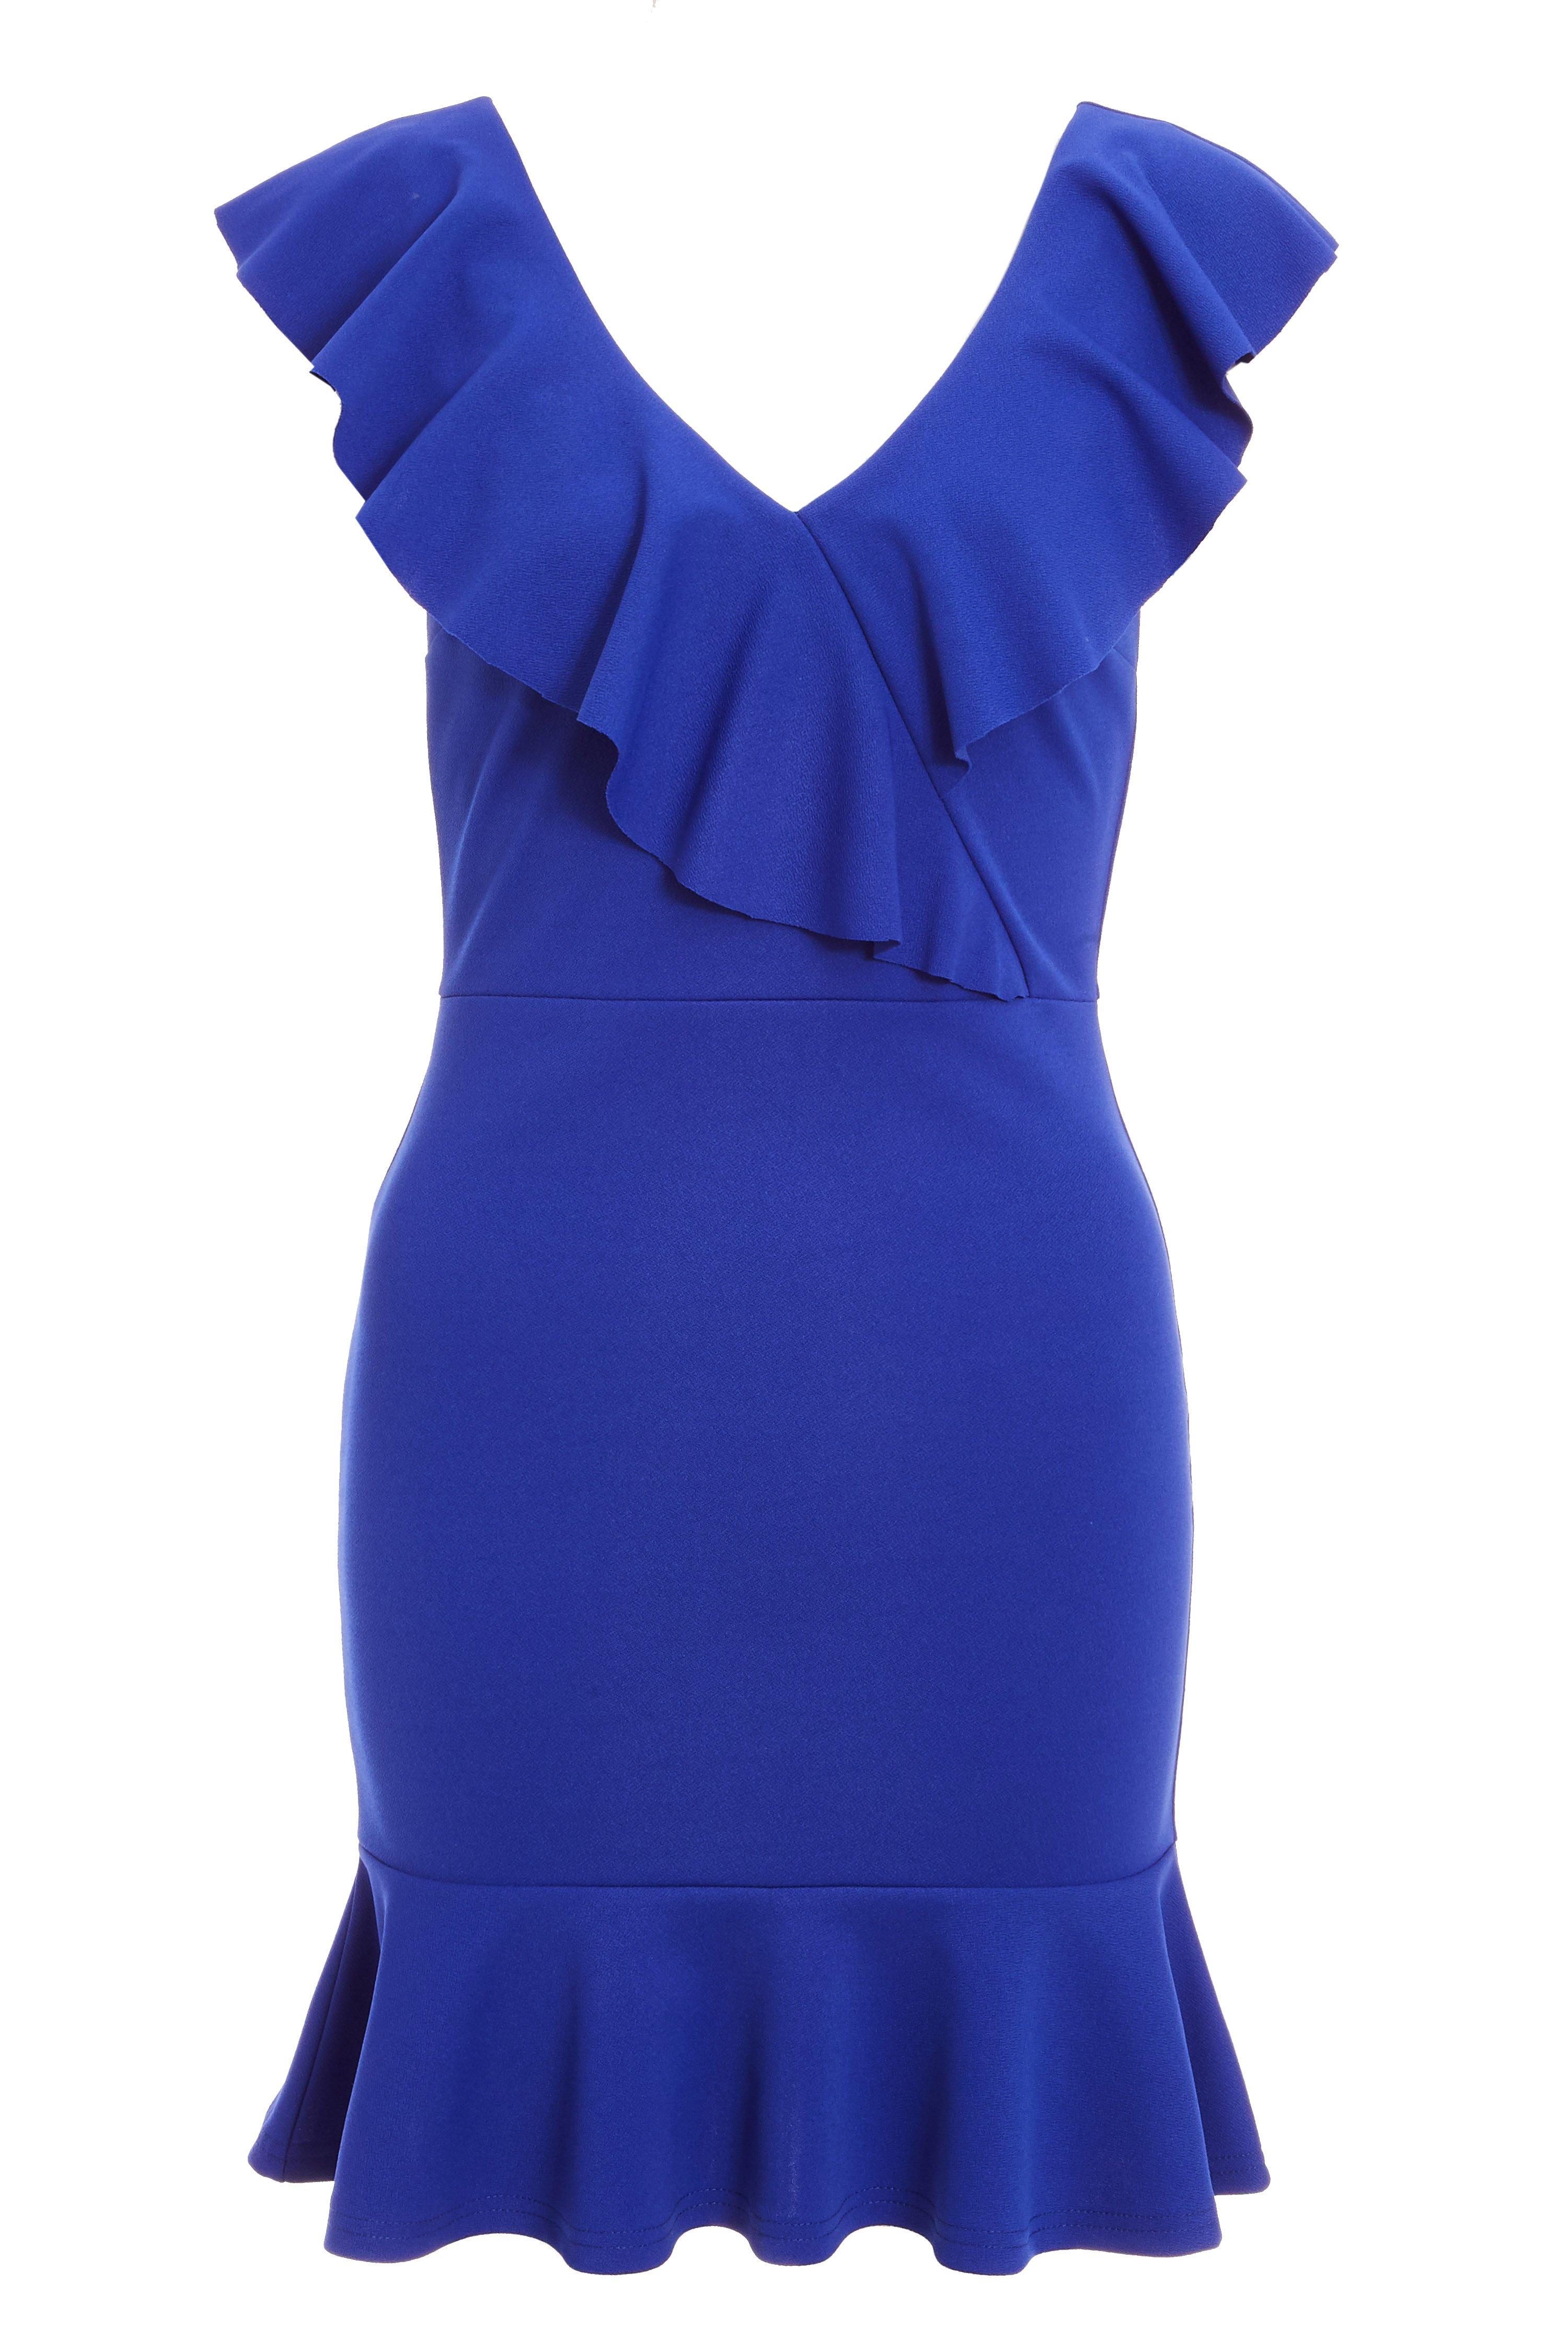 Royal Blue Frill Bodycon Dress - Quiz Clothing